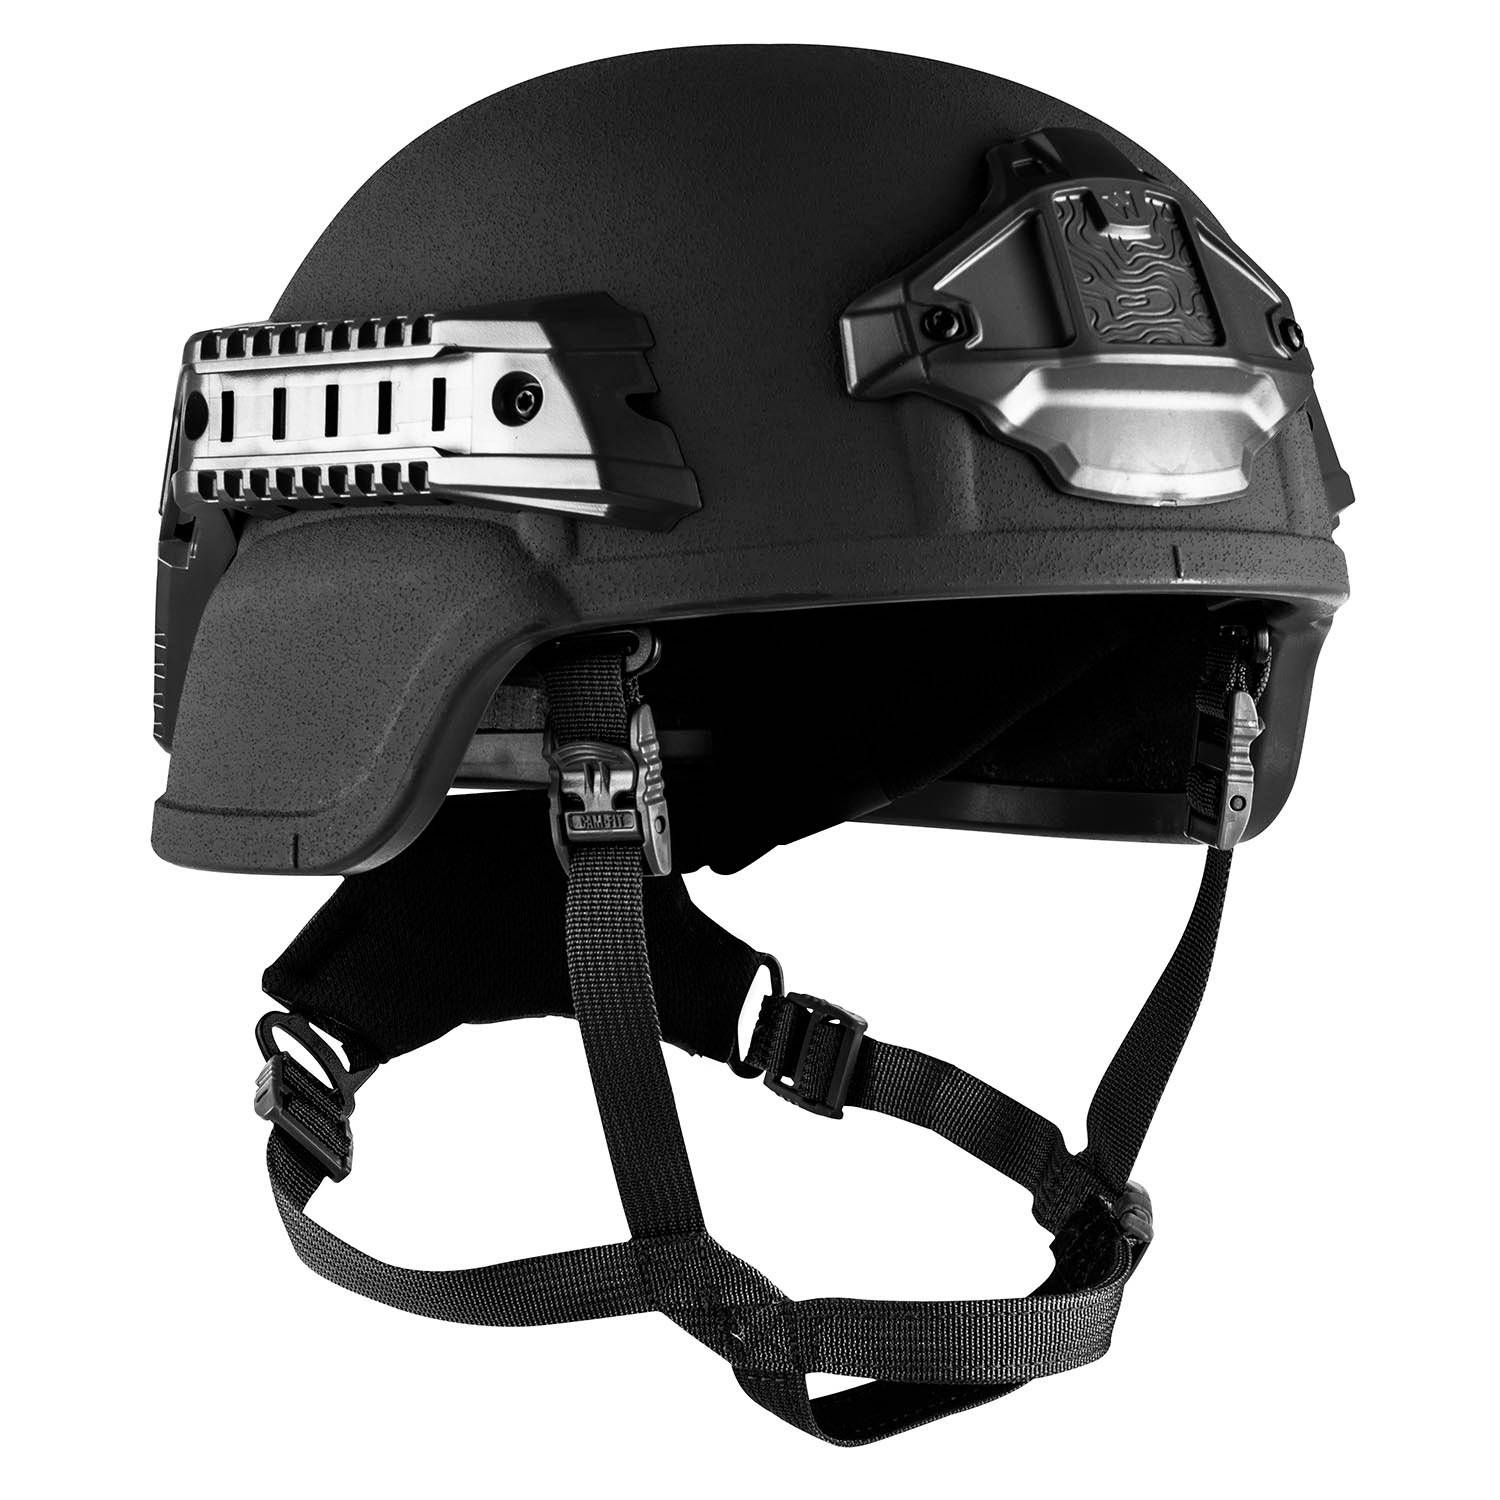 Team Wendy Epic Protector Ballistic Helmet